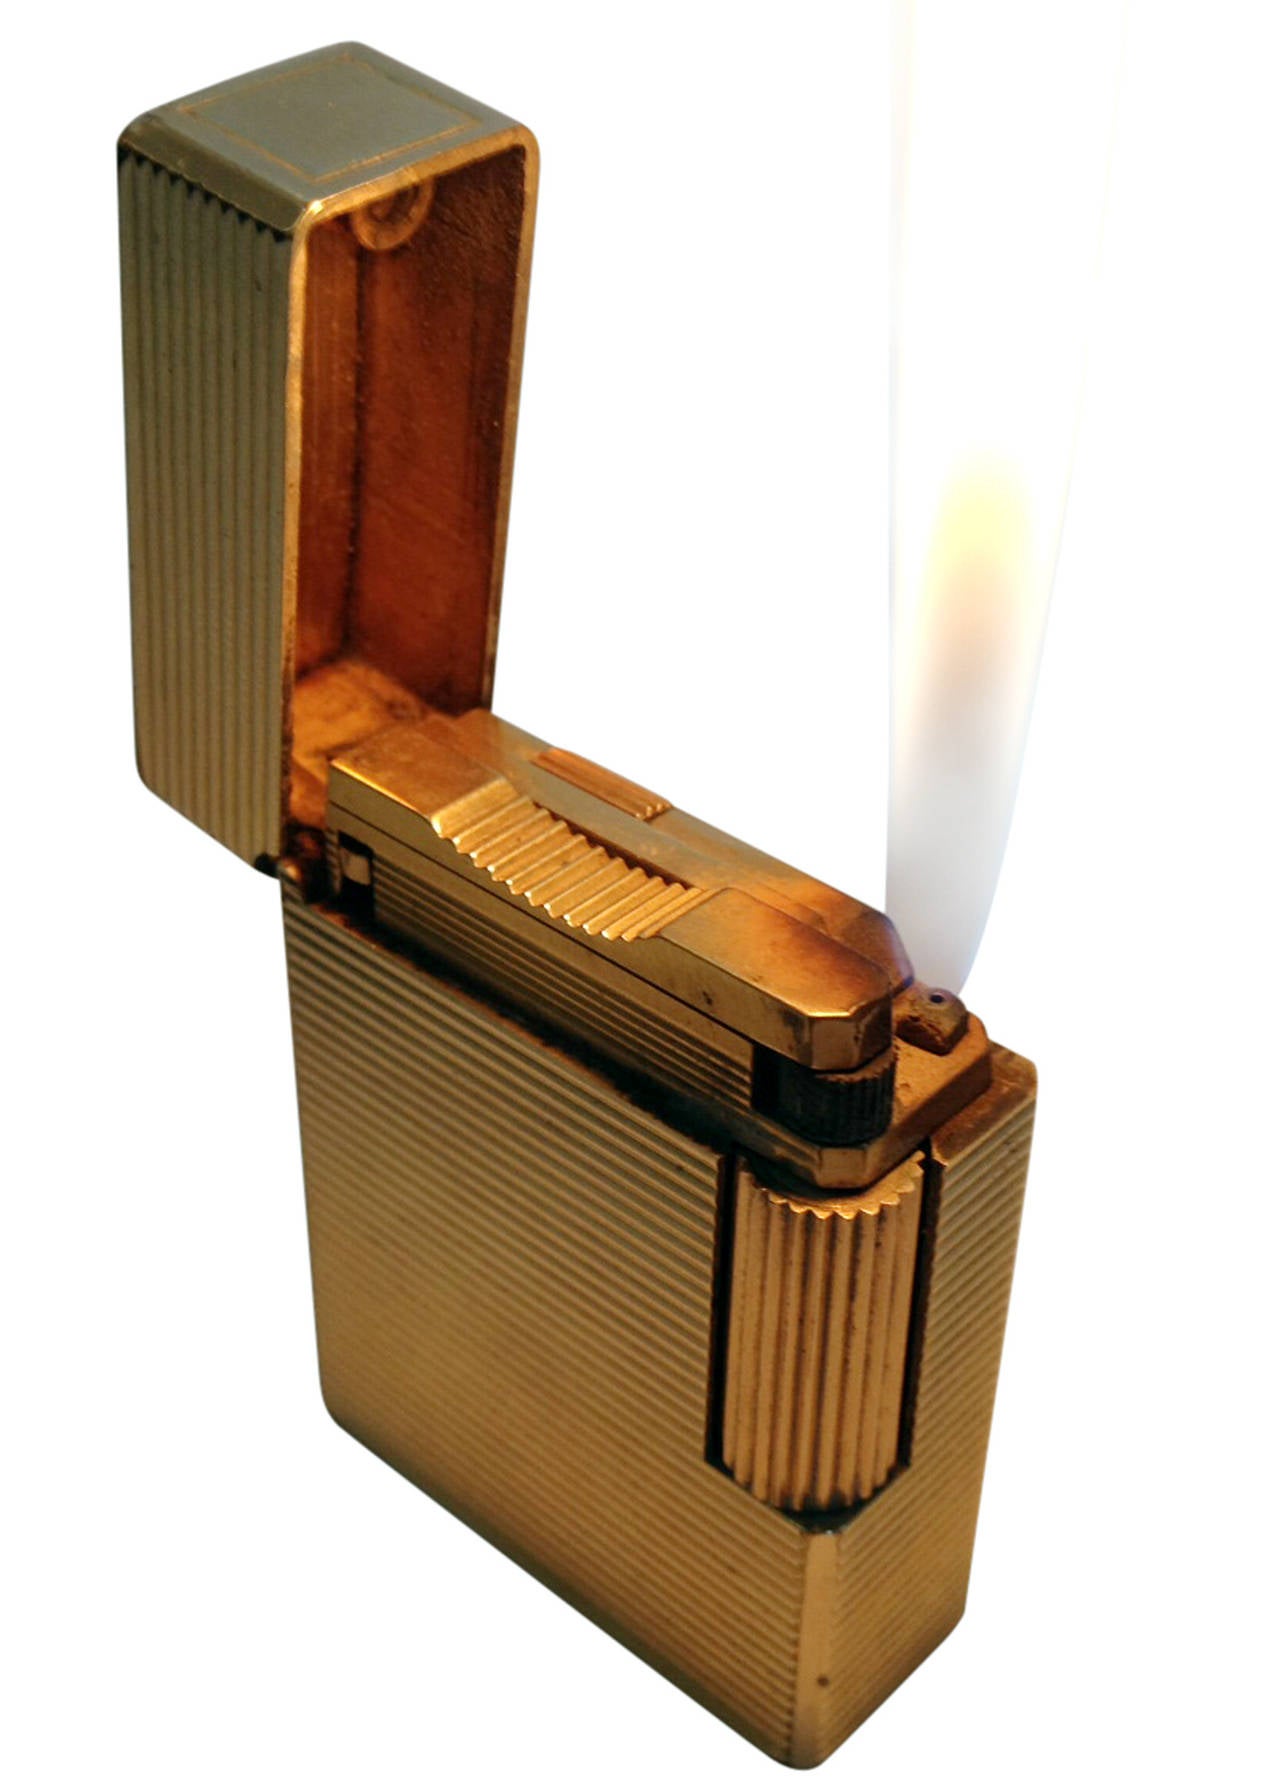 Modern S.T. Dupont Line 1 Pocket Lighter in box  ** Saturday Sale **